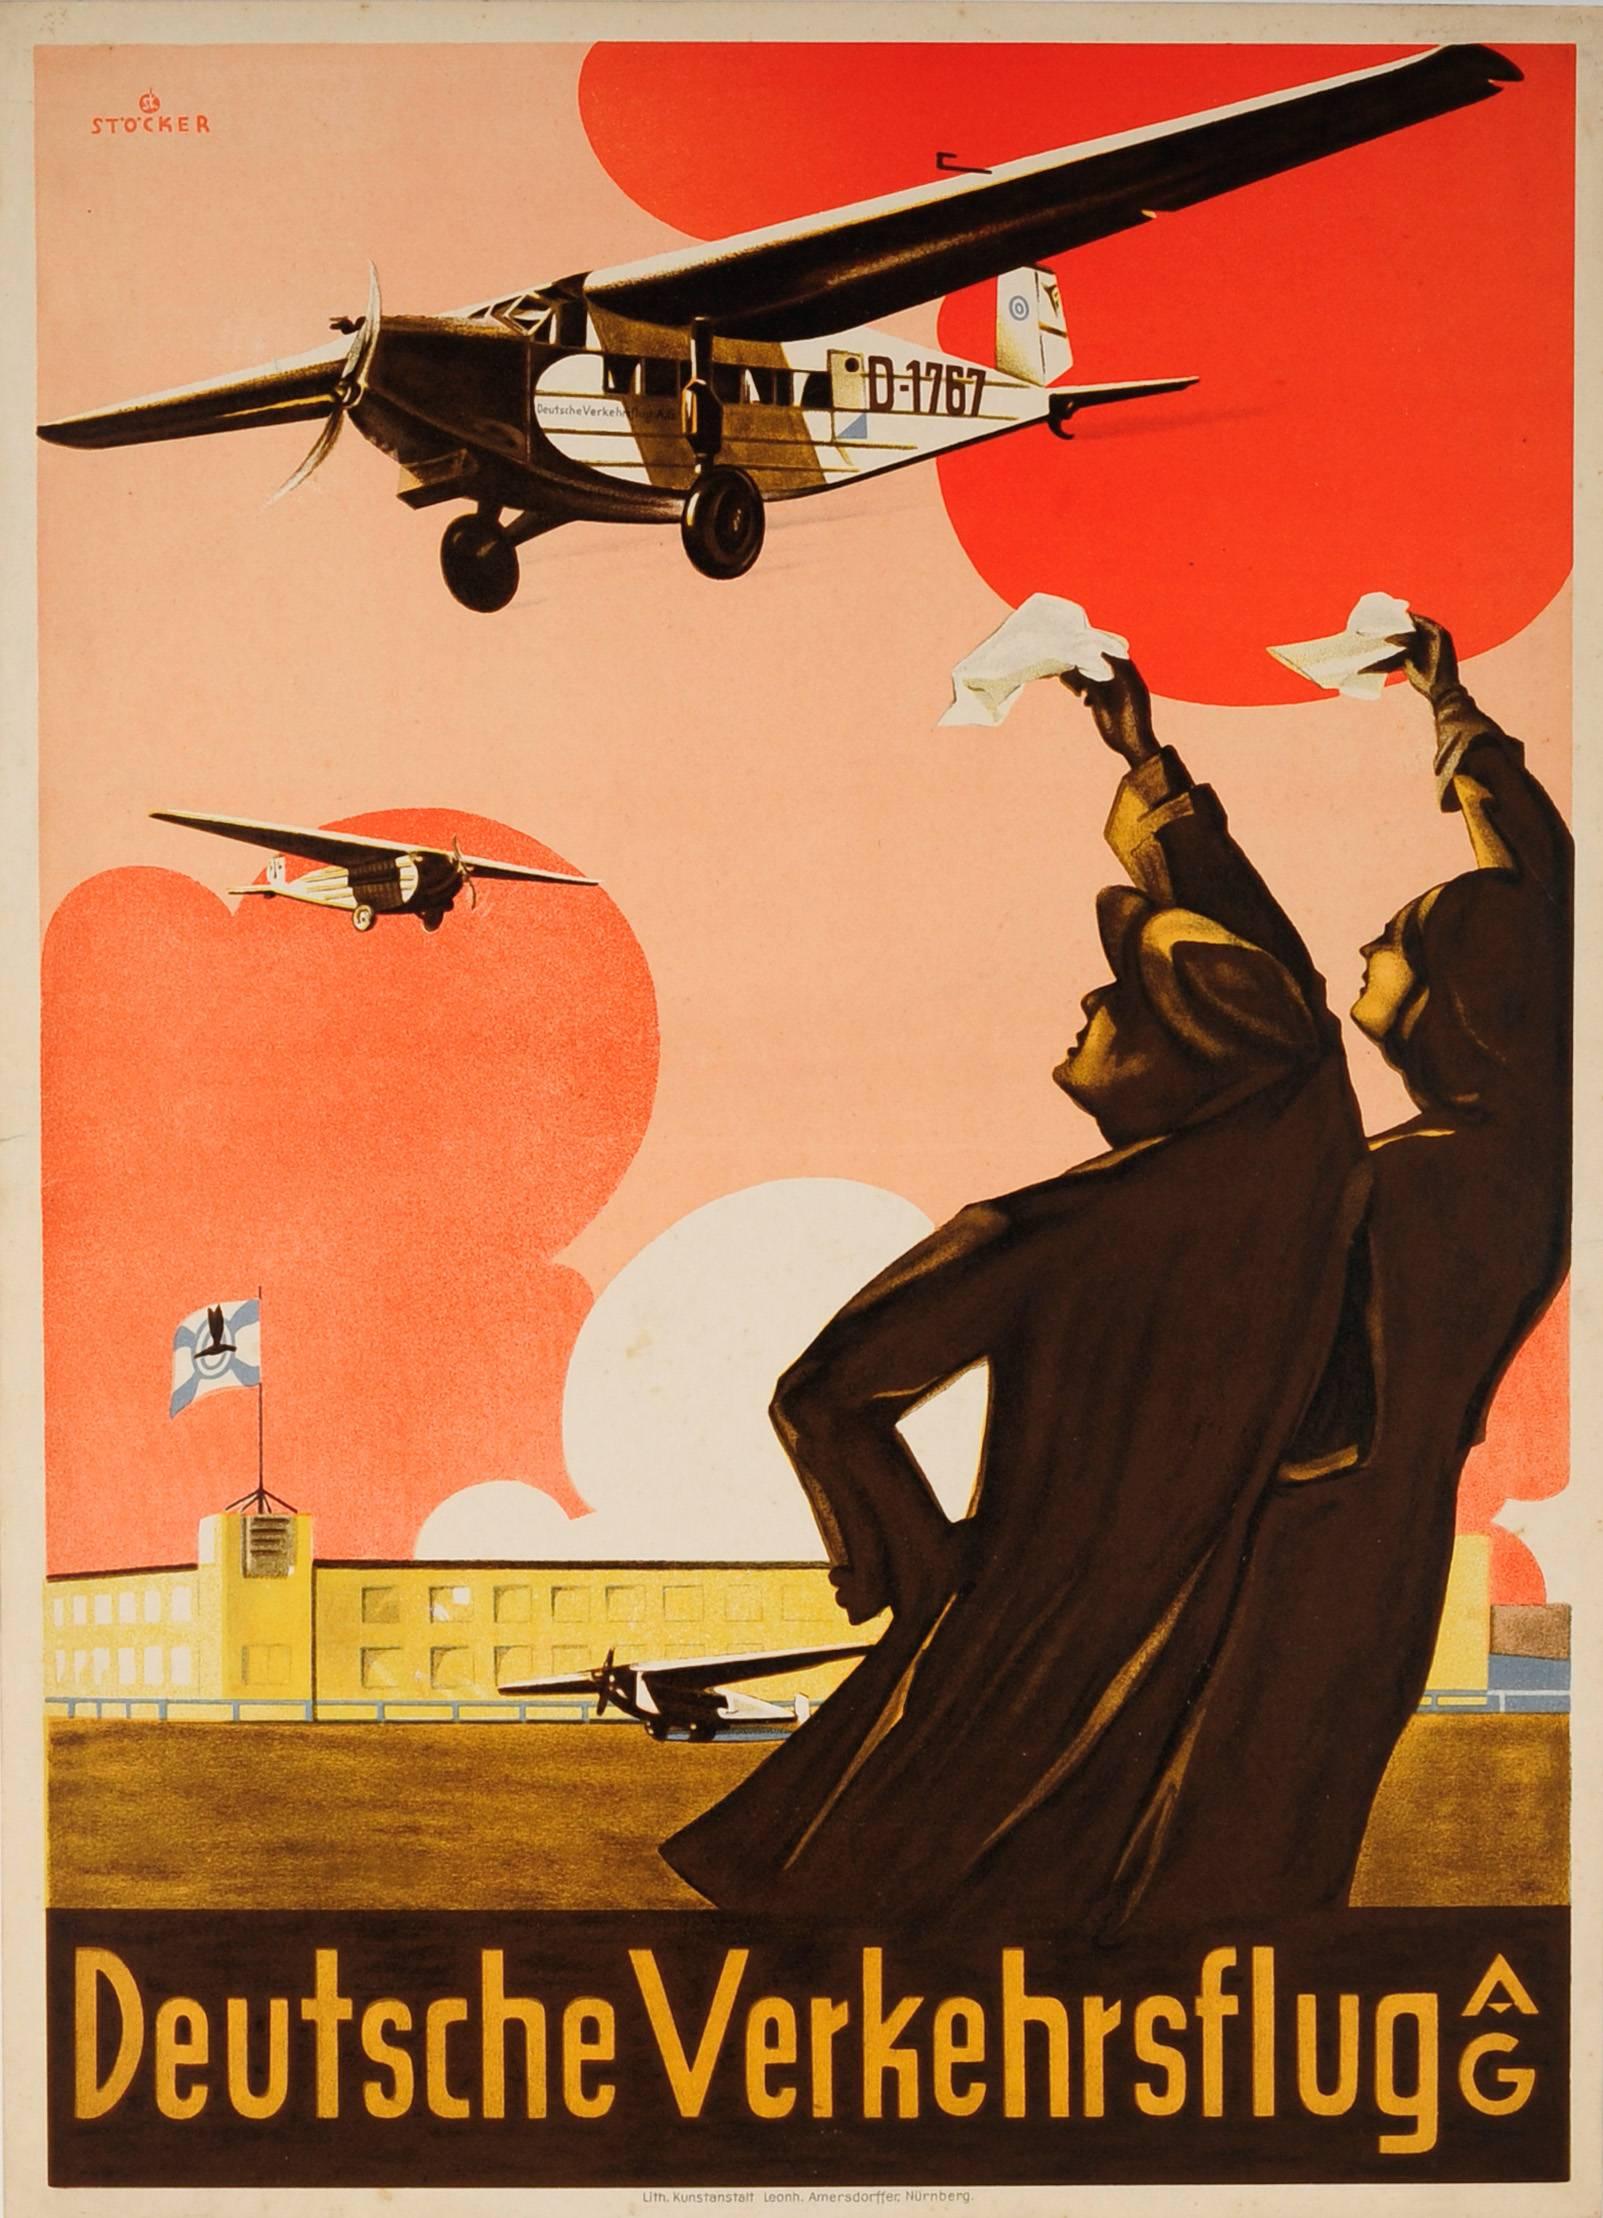 Stocker Print - Original Vintage German Travel Advertising Poster For Deutsche Verkehrsflug AG